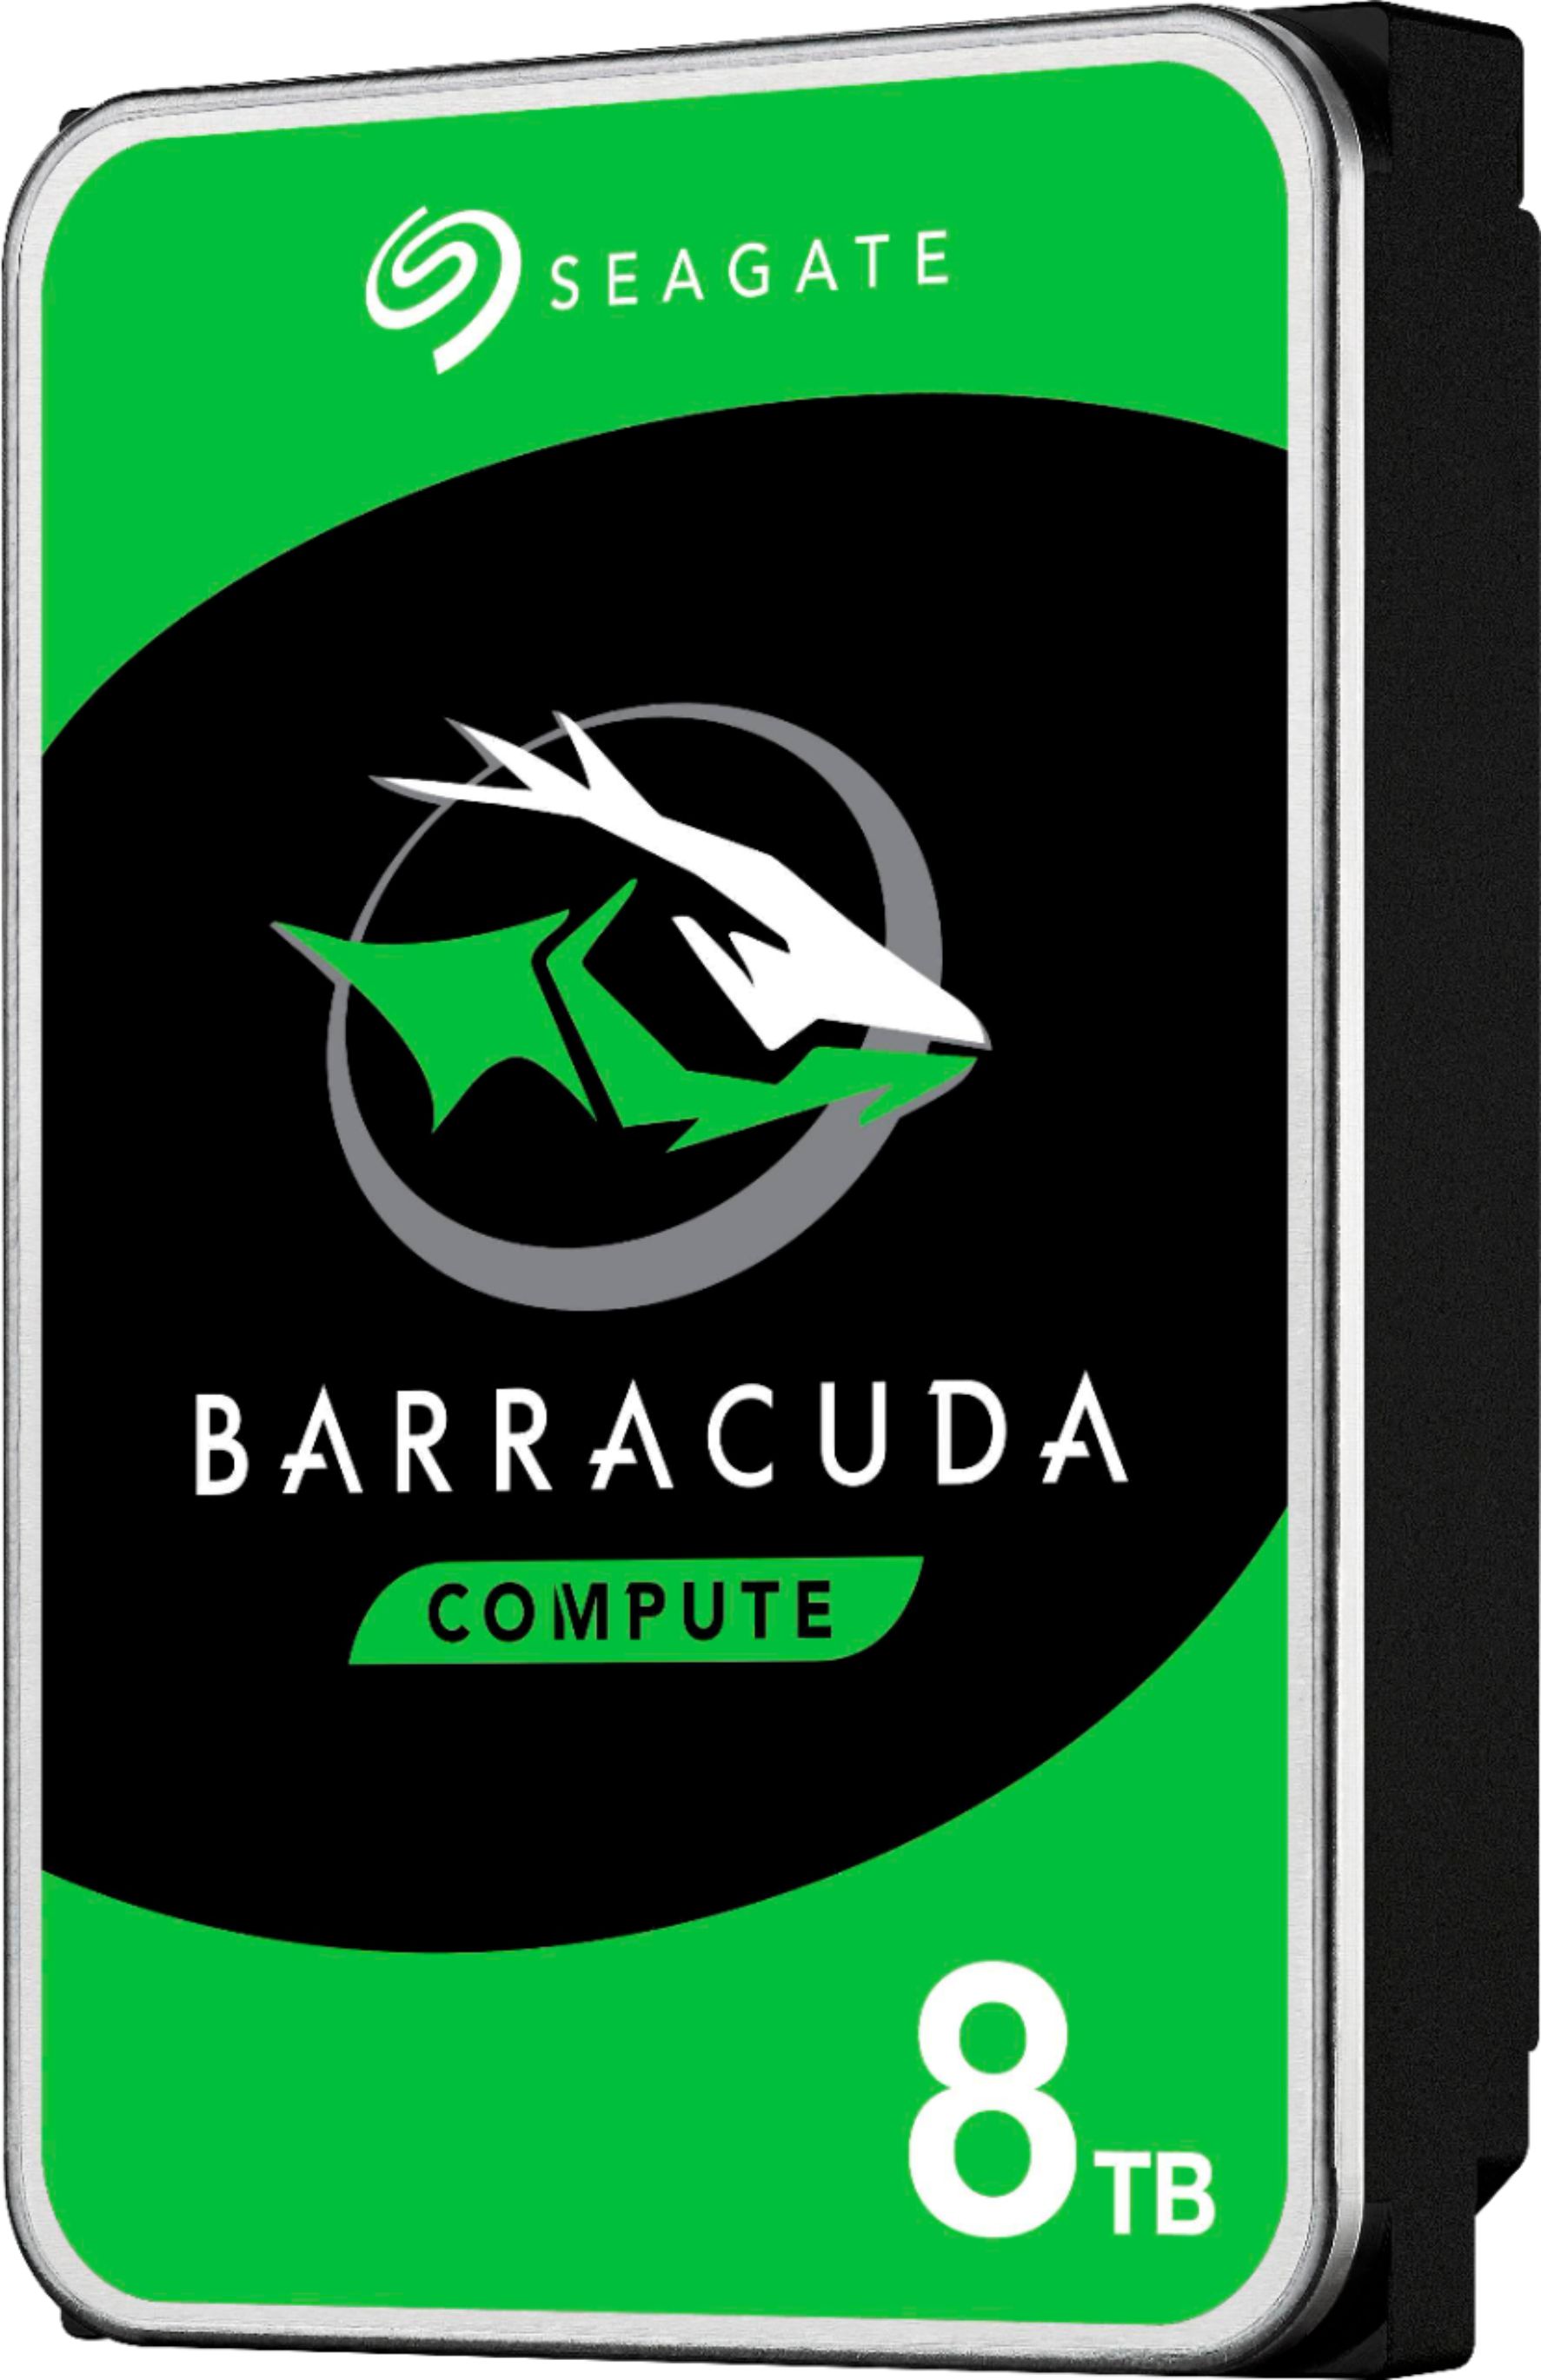 Left View: Seagate - Barracuda 8TB Internal SATA Hard Drive for Desktops